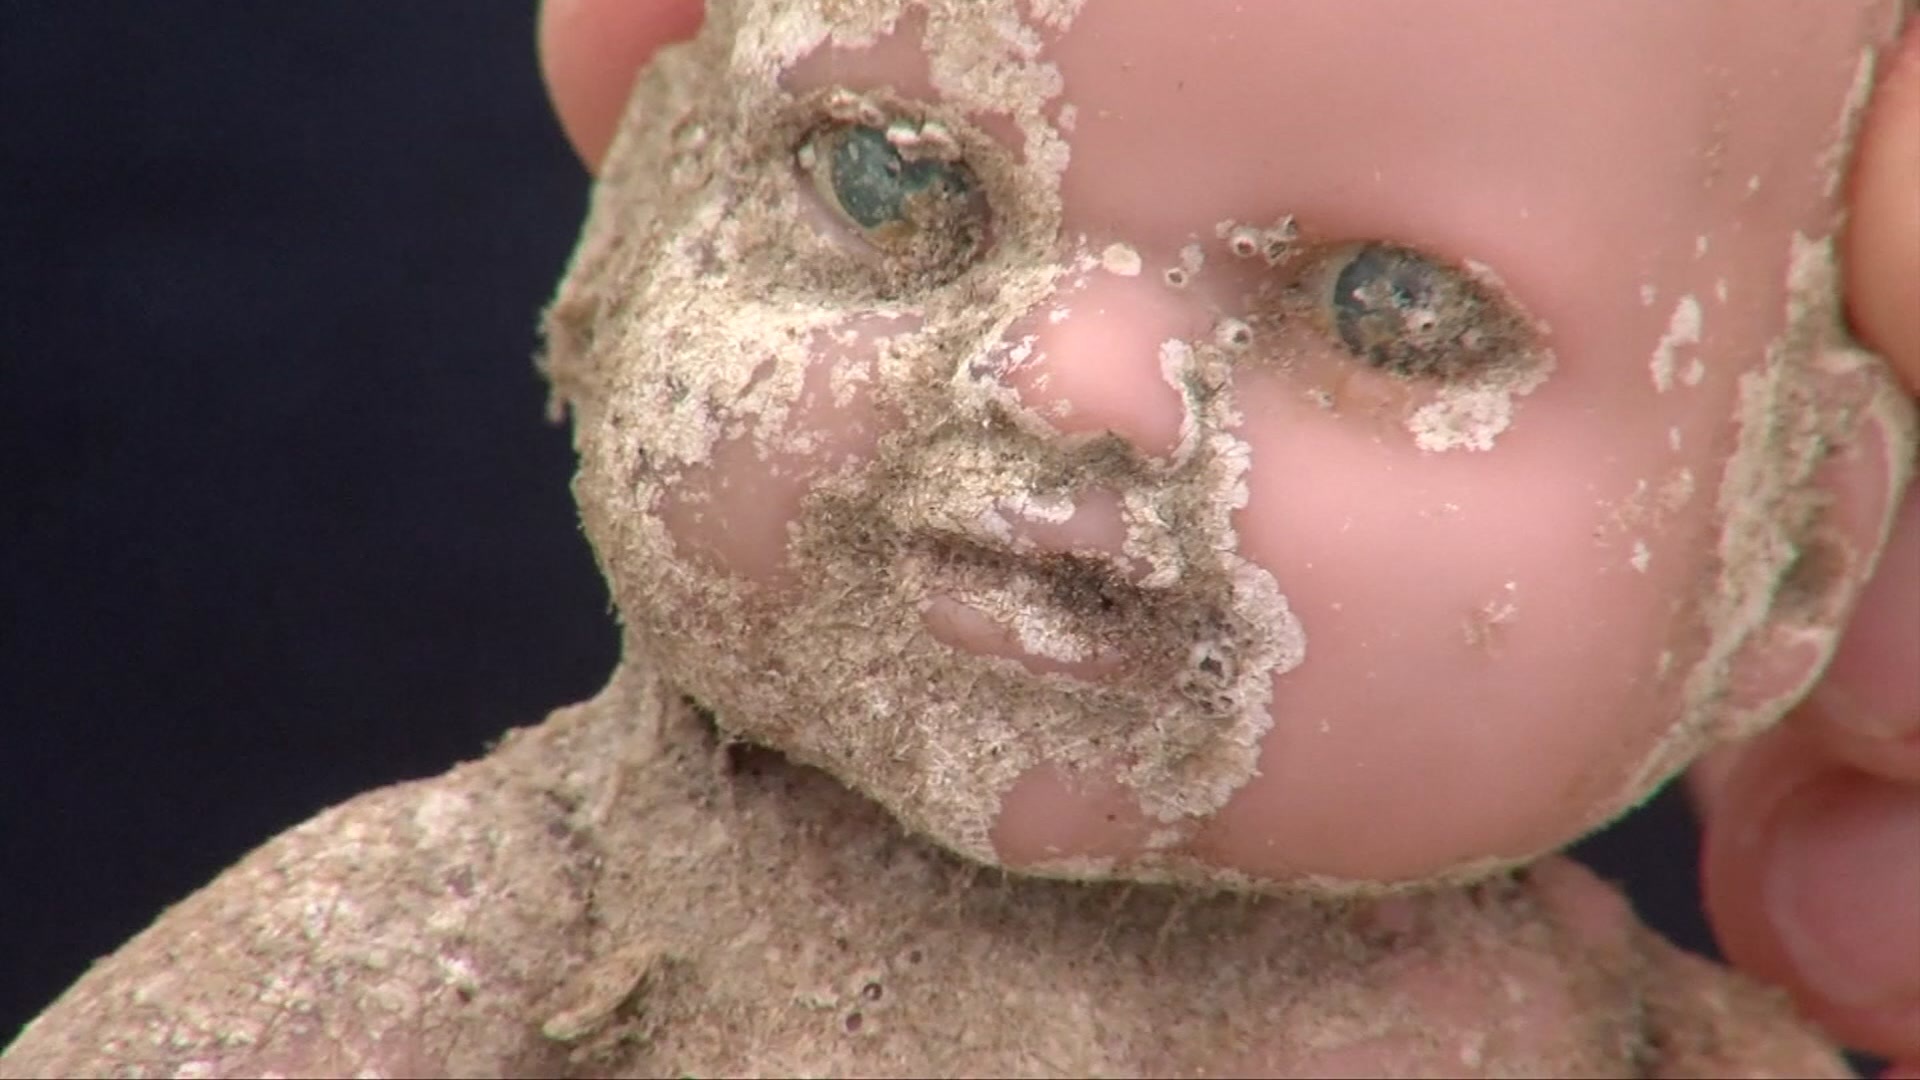 Unexplained Creepy Dolls Wash Up on Texas Beaches